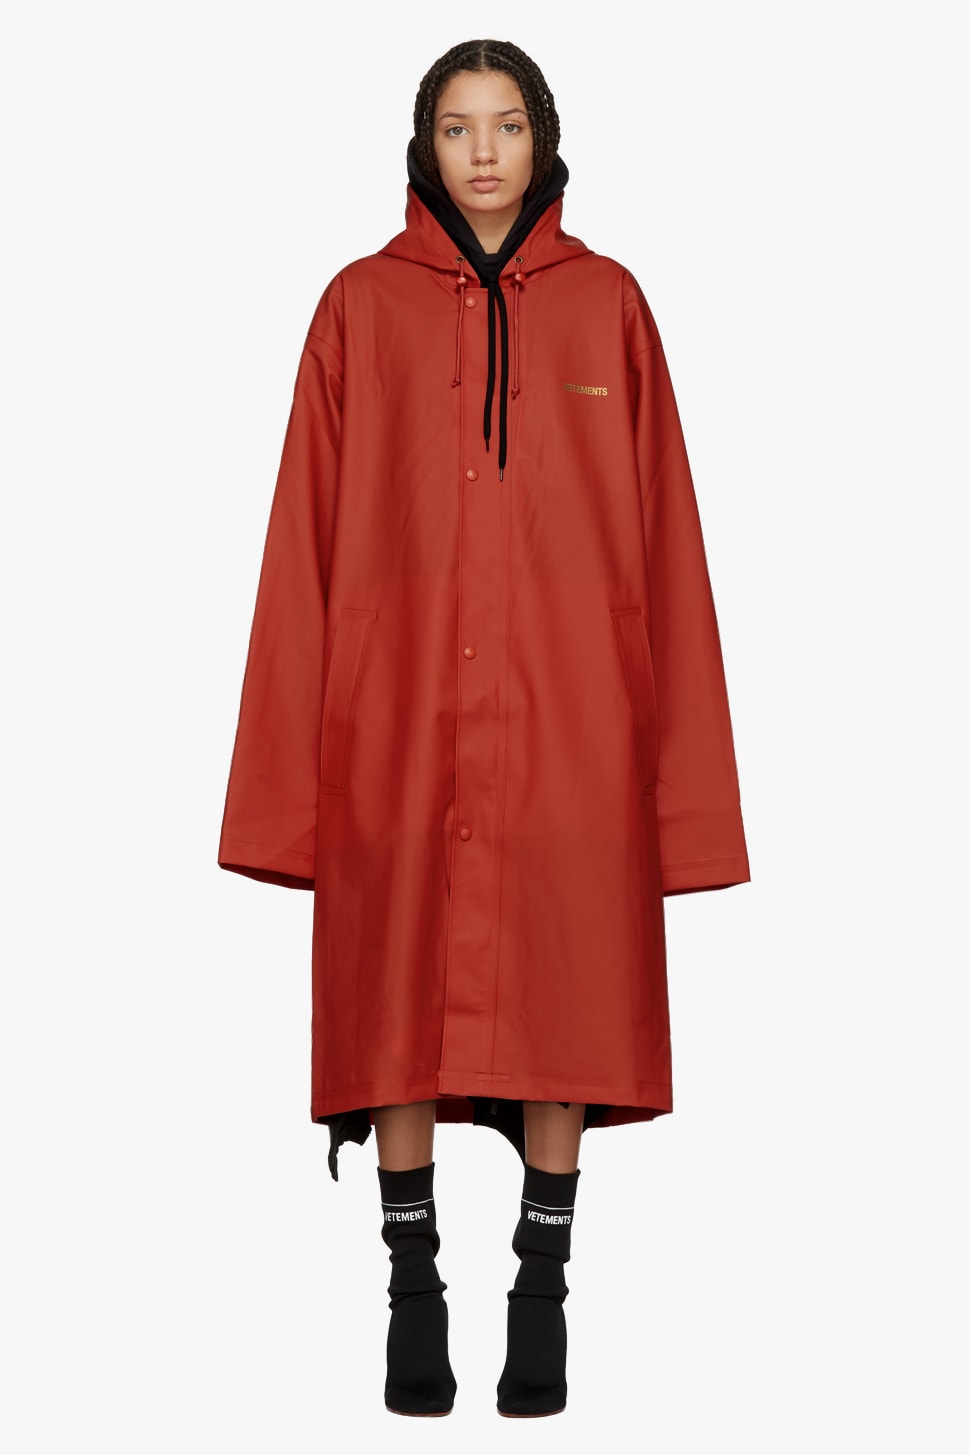 Vetements Spring/Summer Collection Drop Raincoat